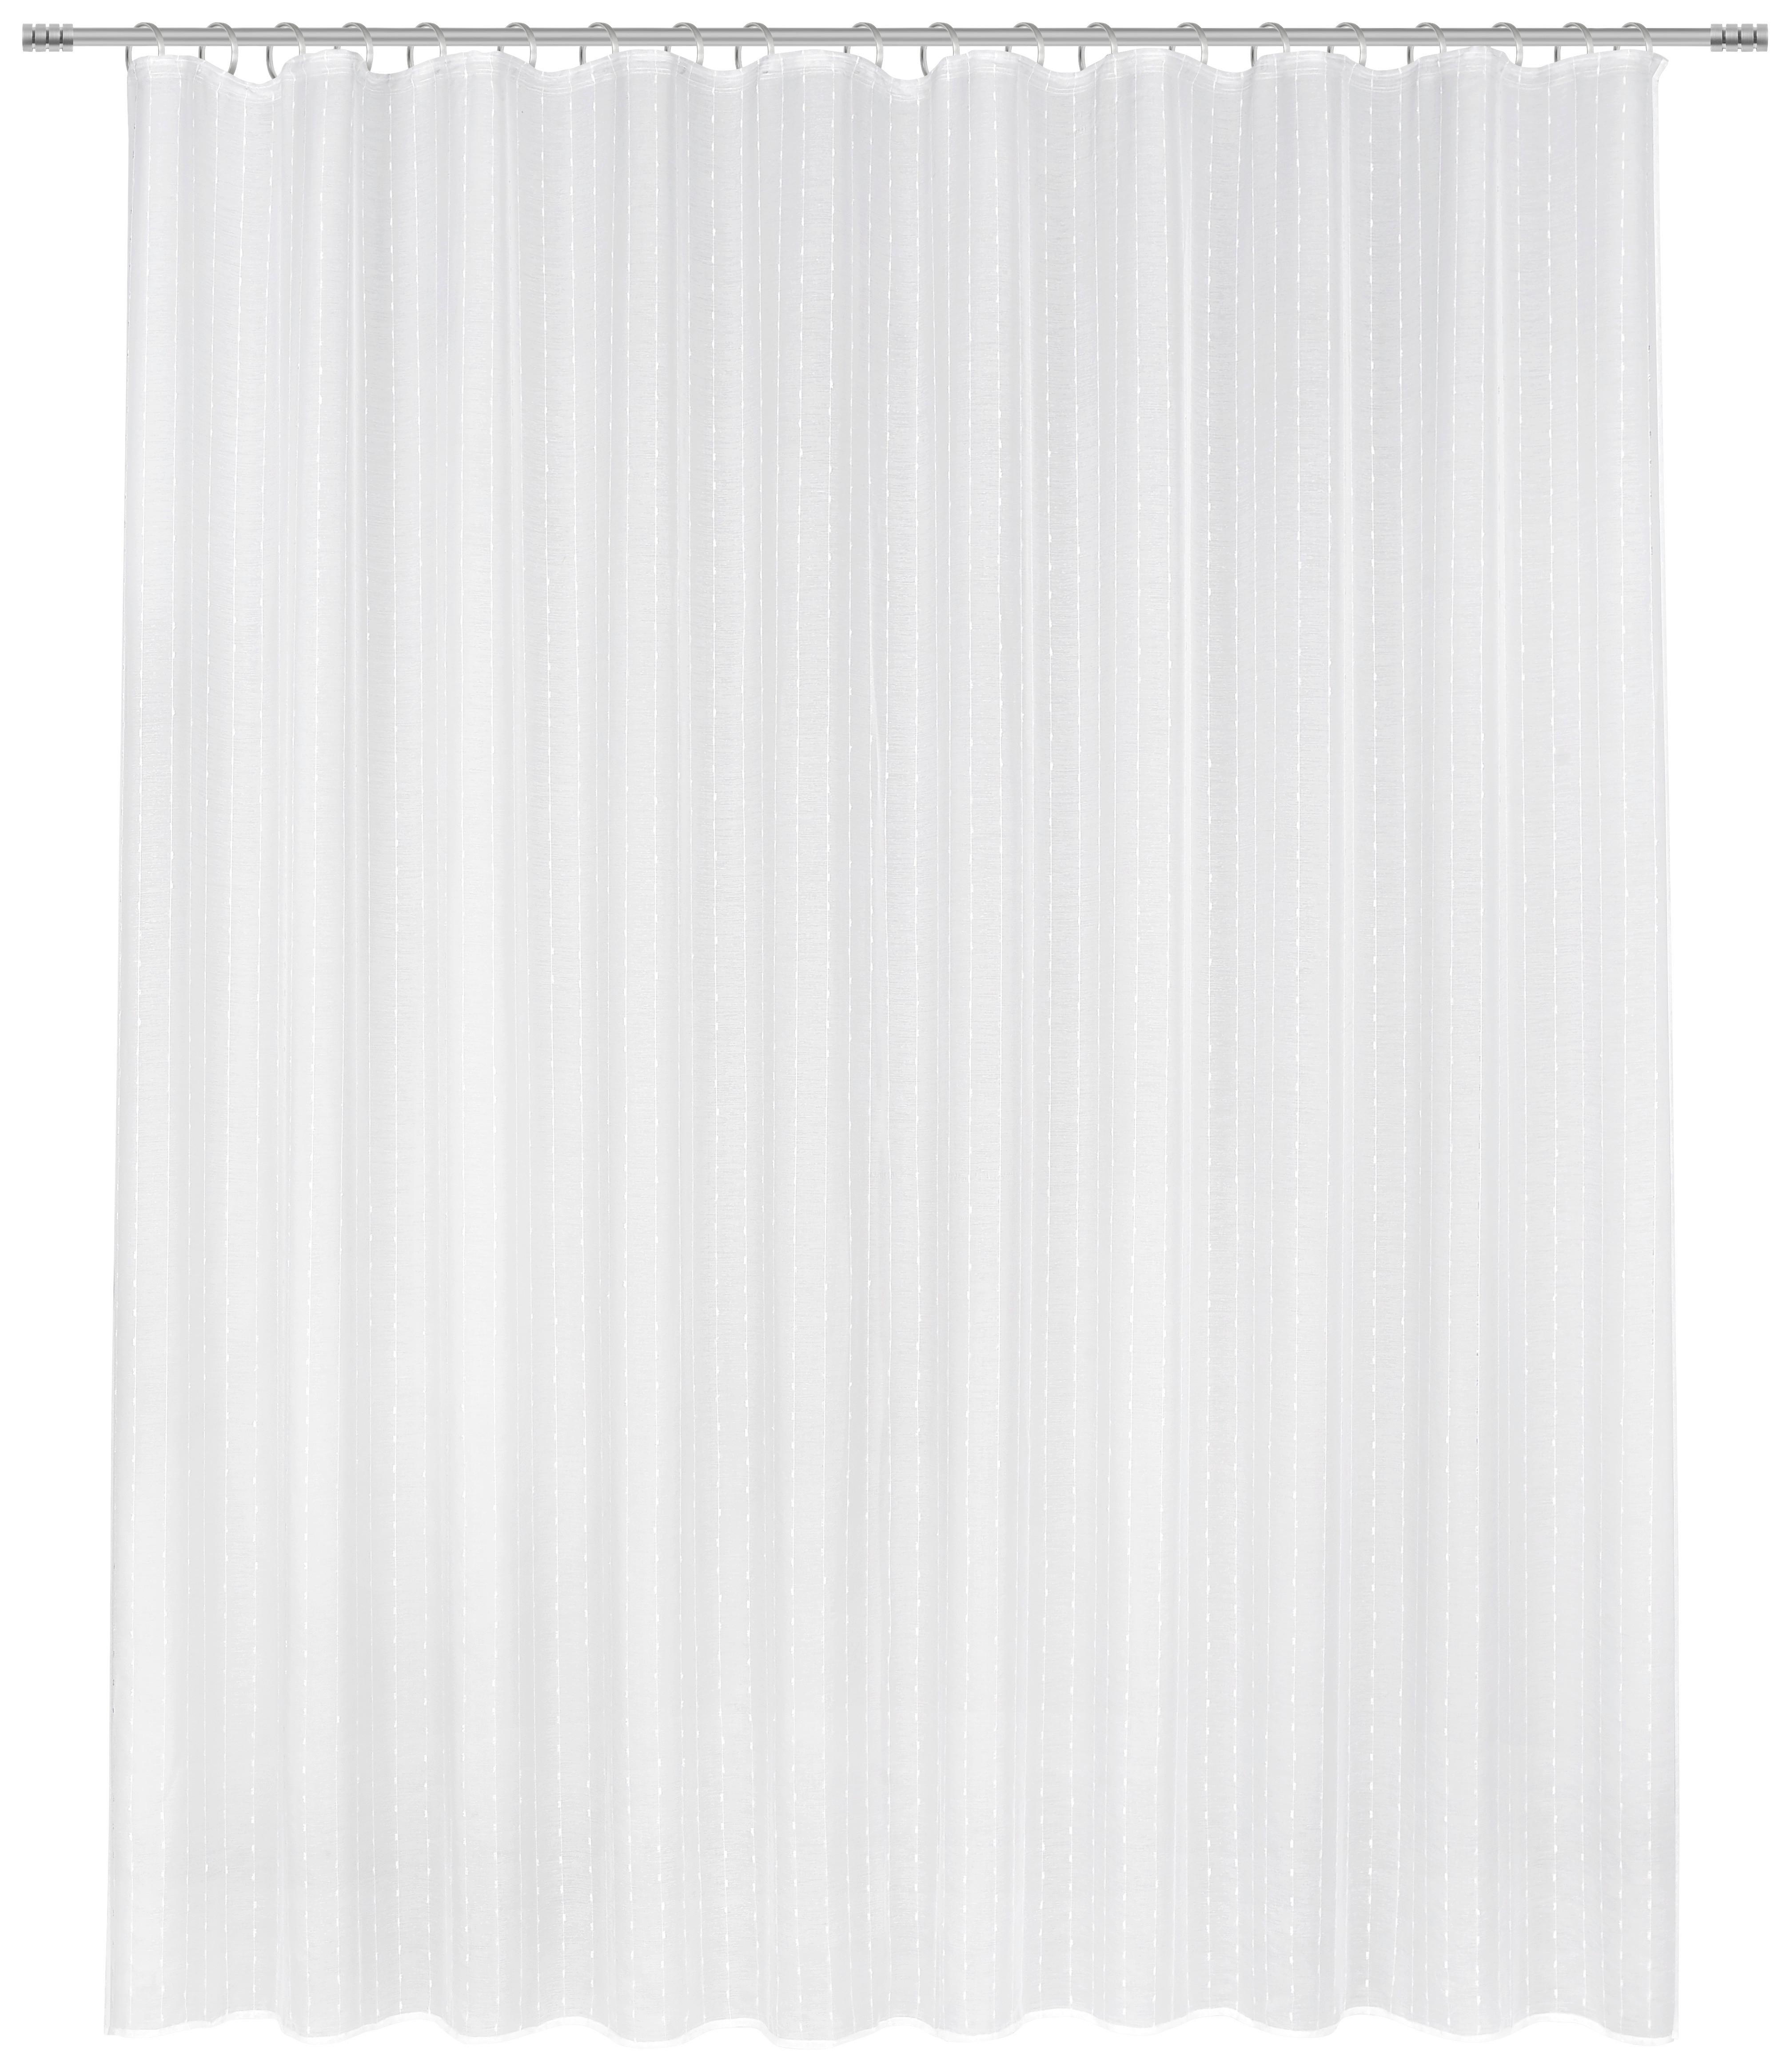 Készfüggöny Lisa 300/245 - Fehér, romantikus/Landhaus, Textil (300/245cm) - Modern Living